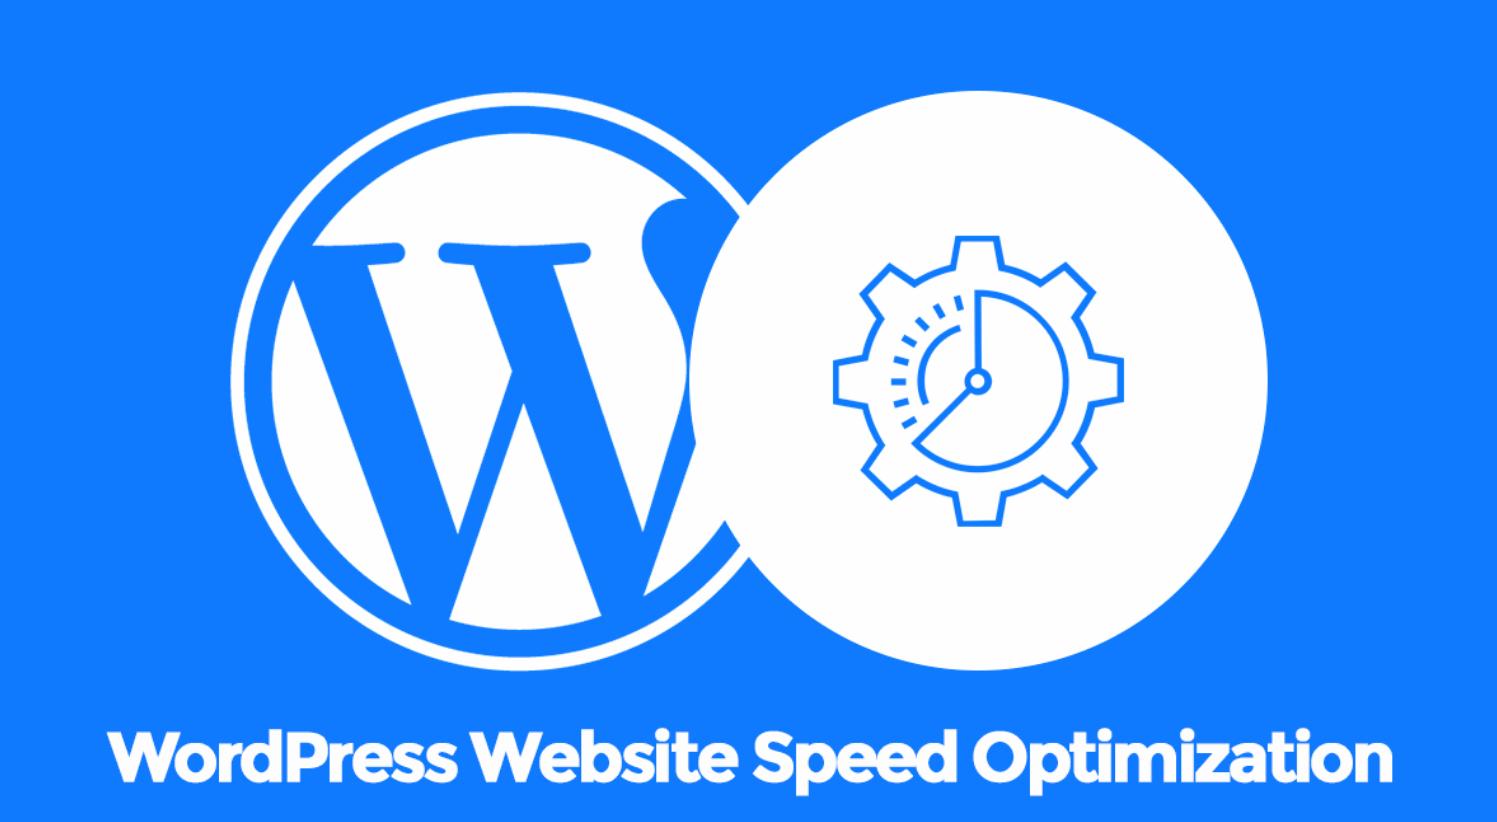 How do I speed up my WordPress website?